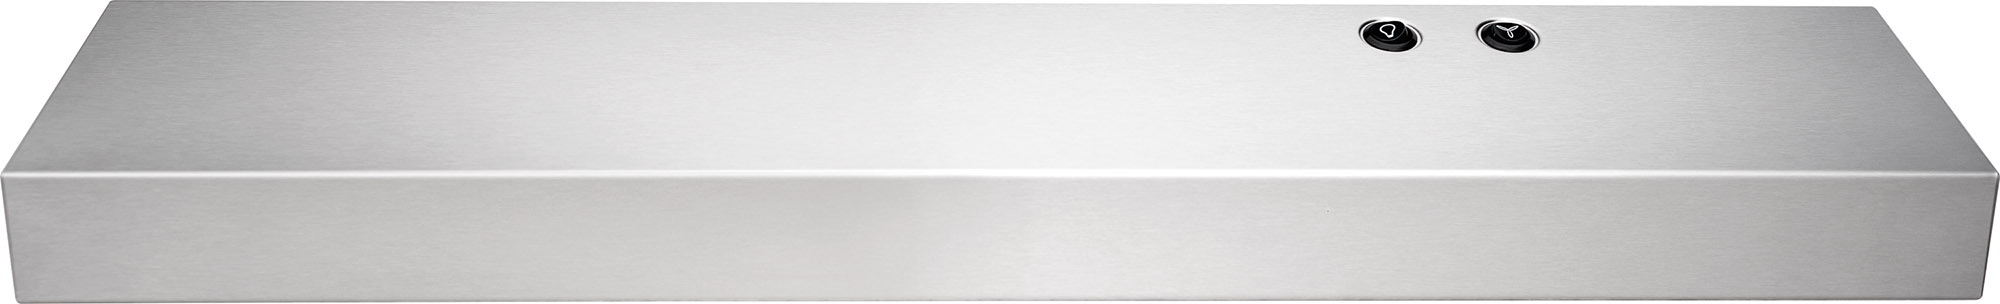 Frigidaire® 30" Stainless Steel Under Cabinet Range Hood